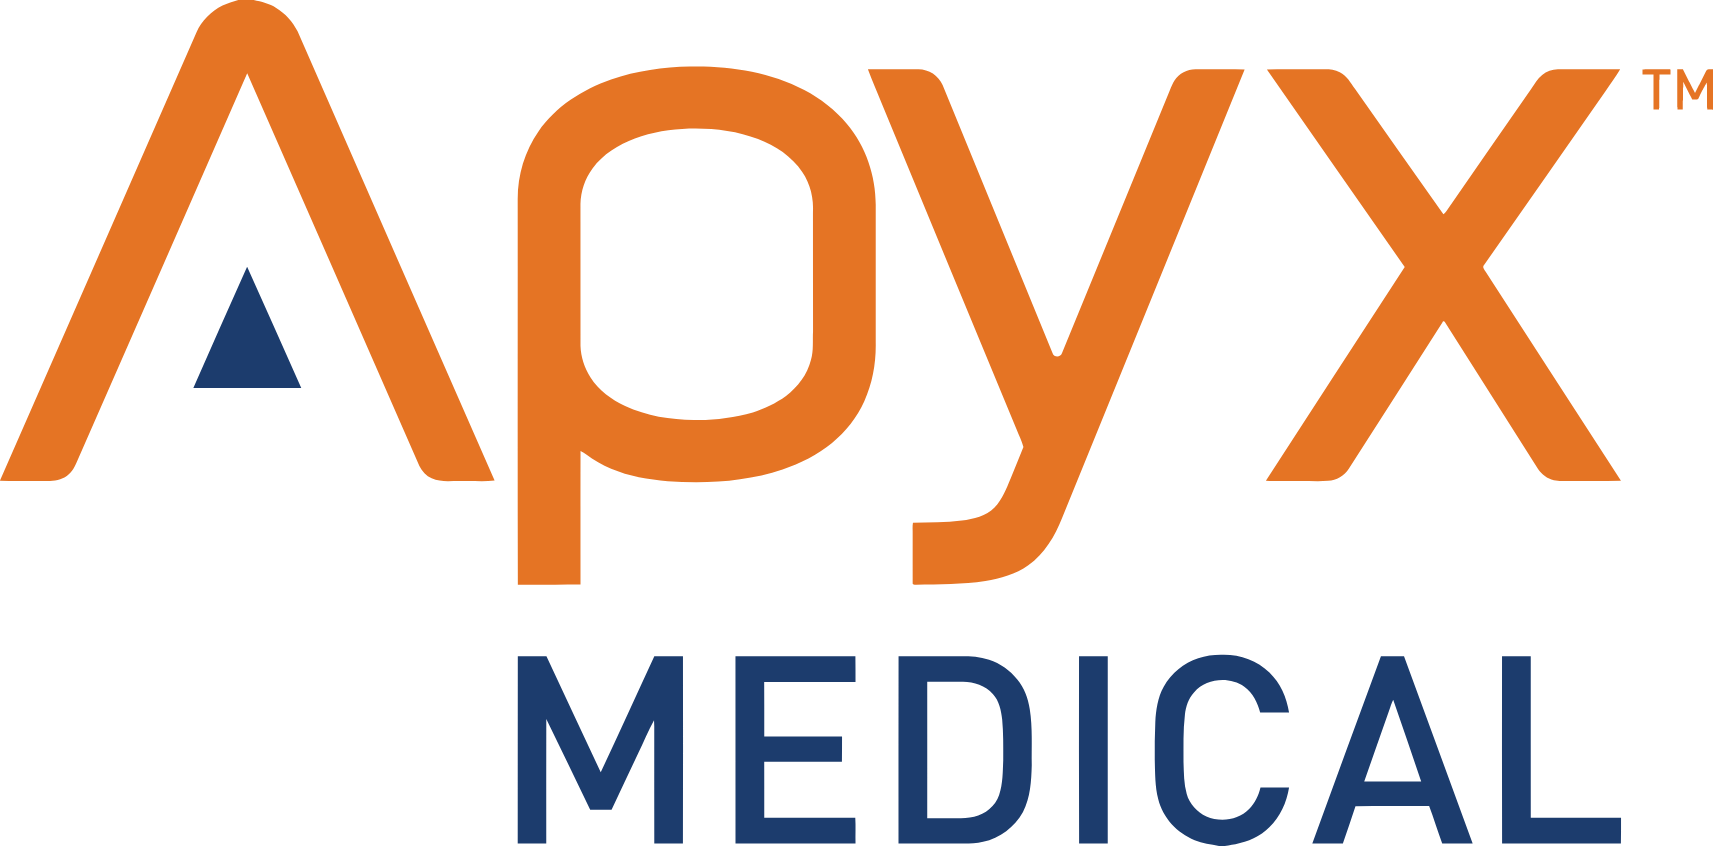 Apyx Medical logo large (transparent PNG)